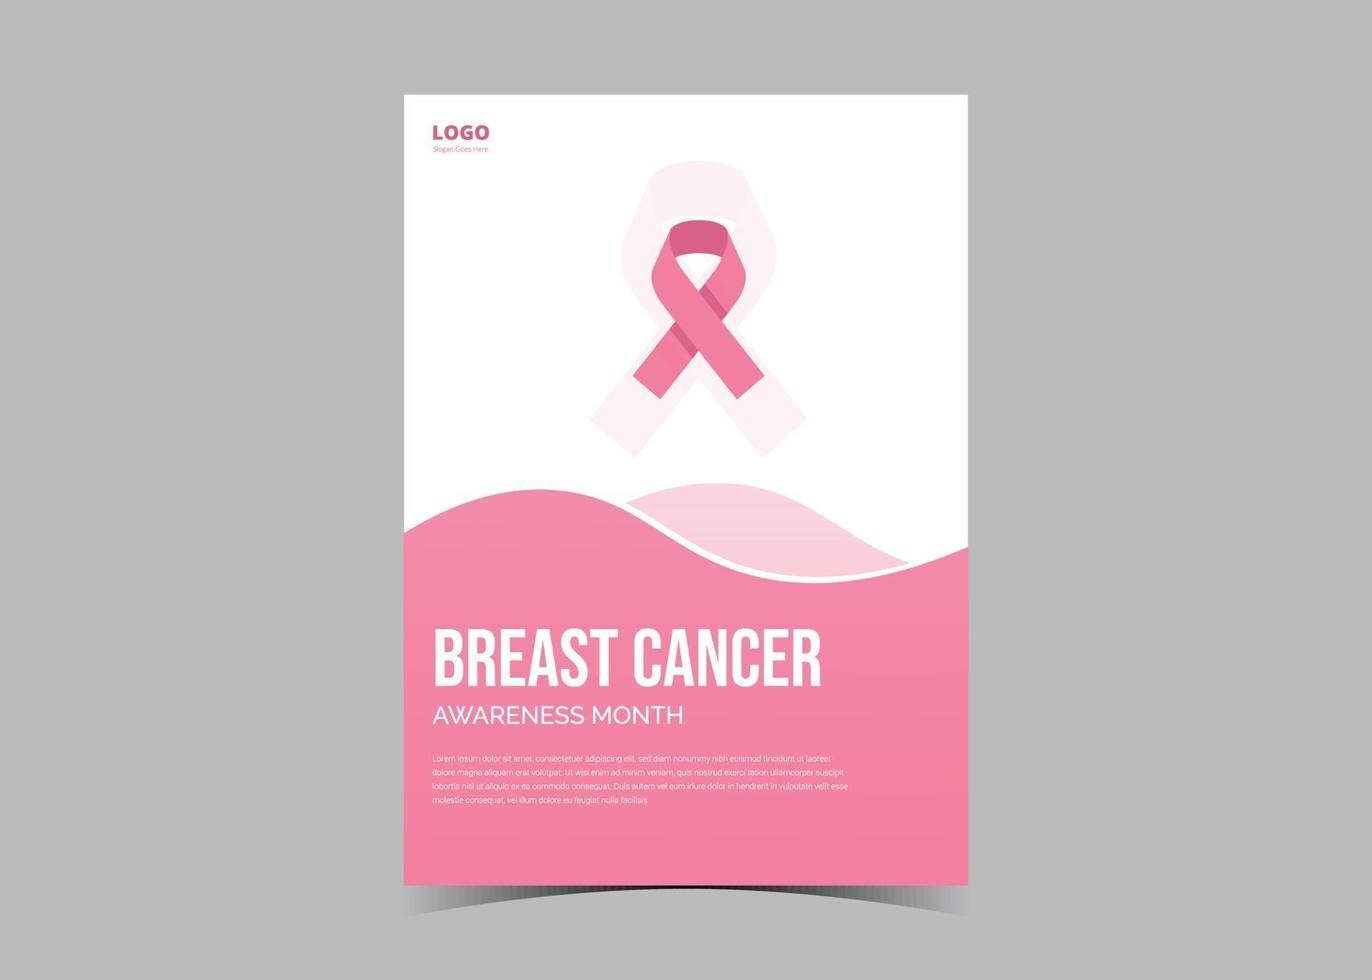 Brustkrebs-Bewusstseins-Flyer-Vorlage. oktober brustkrebs. vektor